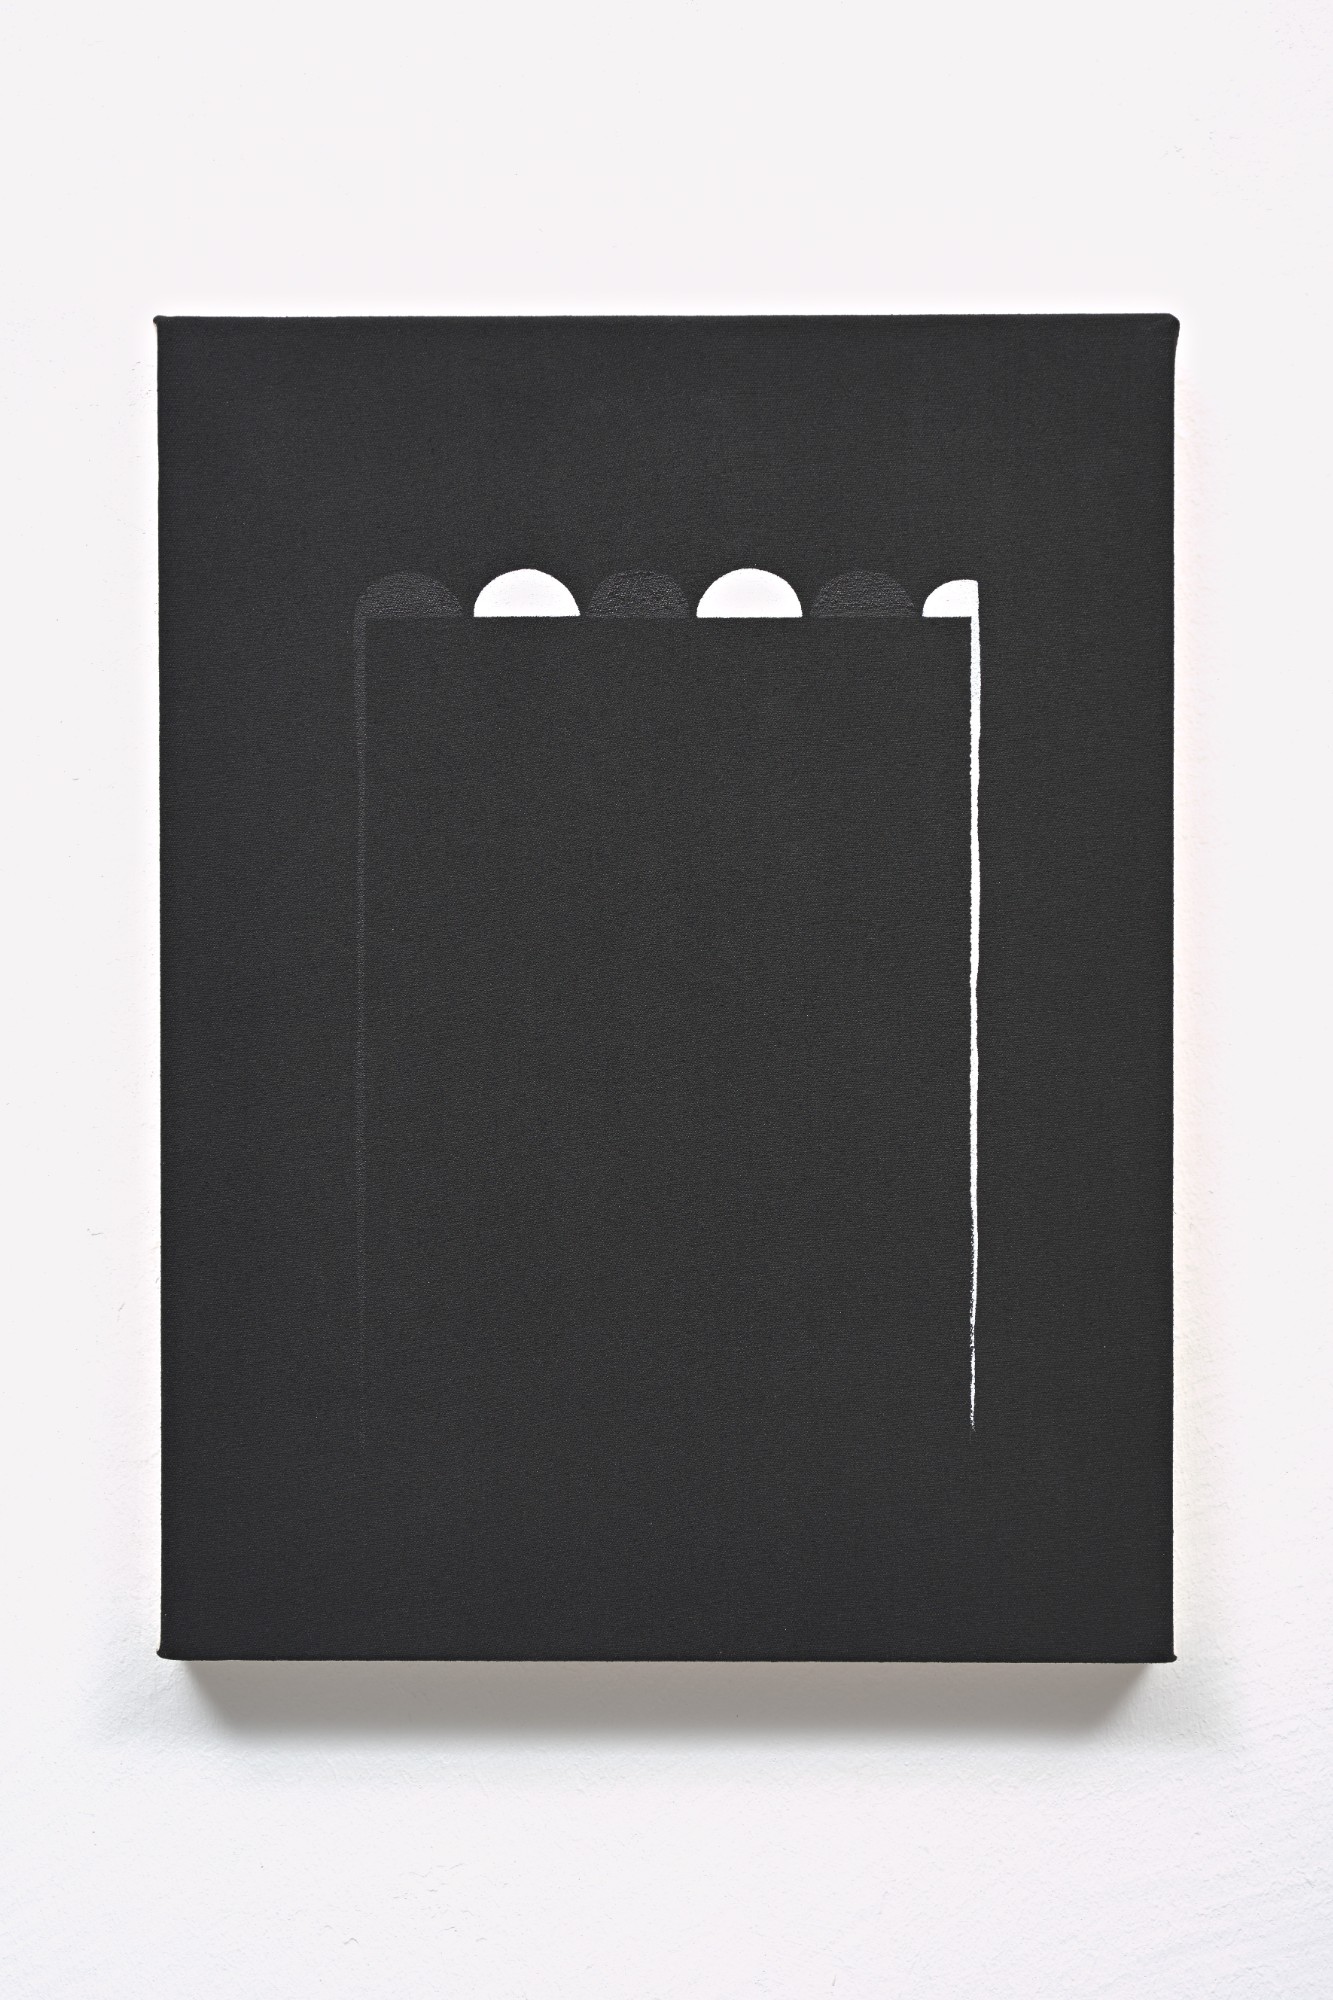 Holger Endres, Black III, 2018, acrylic on canvas, 40 x 30 cm